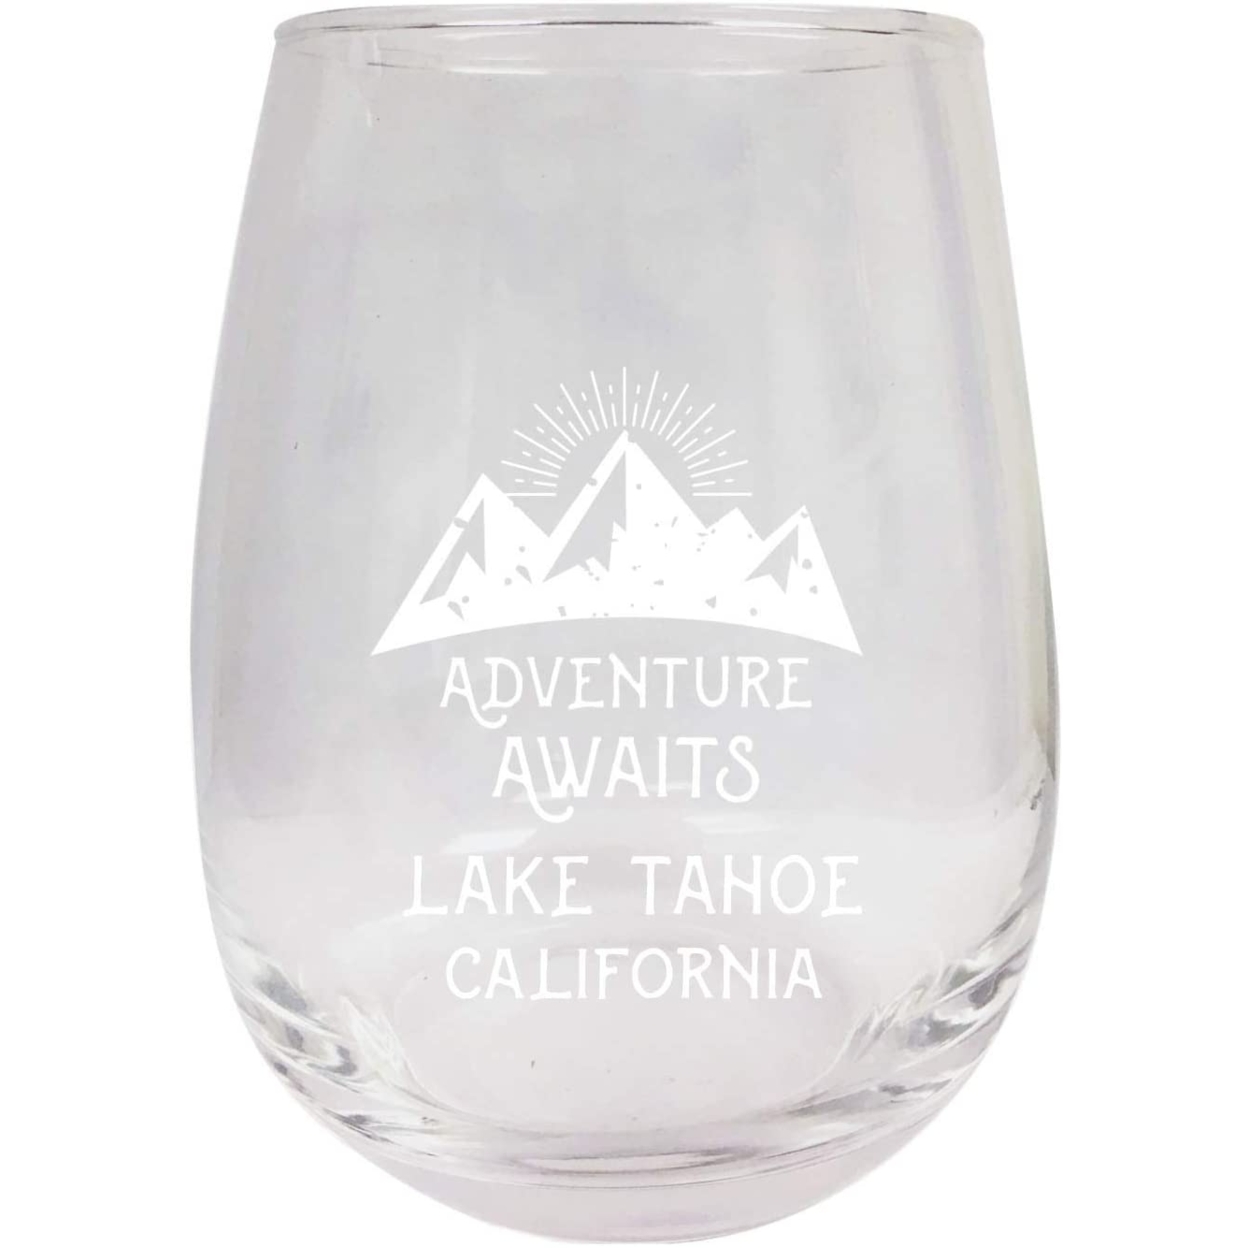 Lake Tahoe California Souvenir 9 Ounce Laser Engraved Stemless Wine Glass Adventure Awaits Design 2-Pack